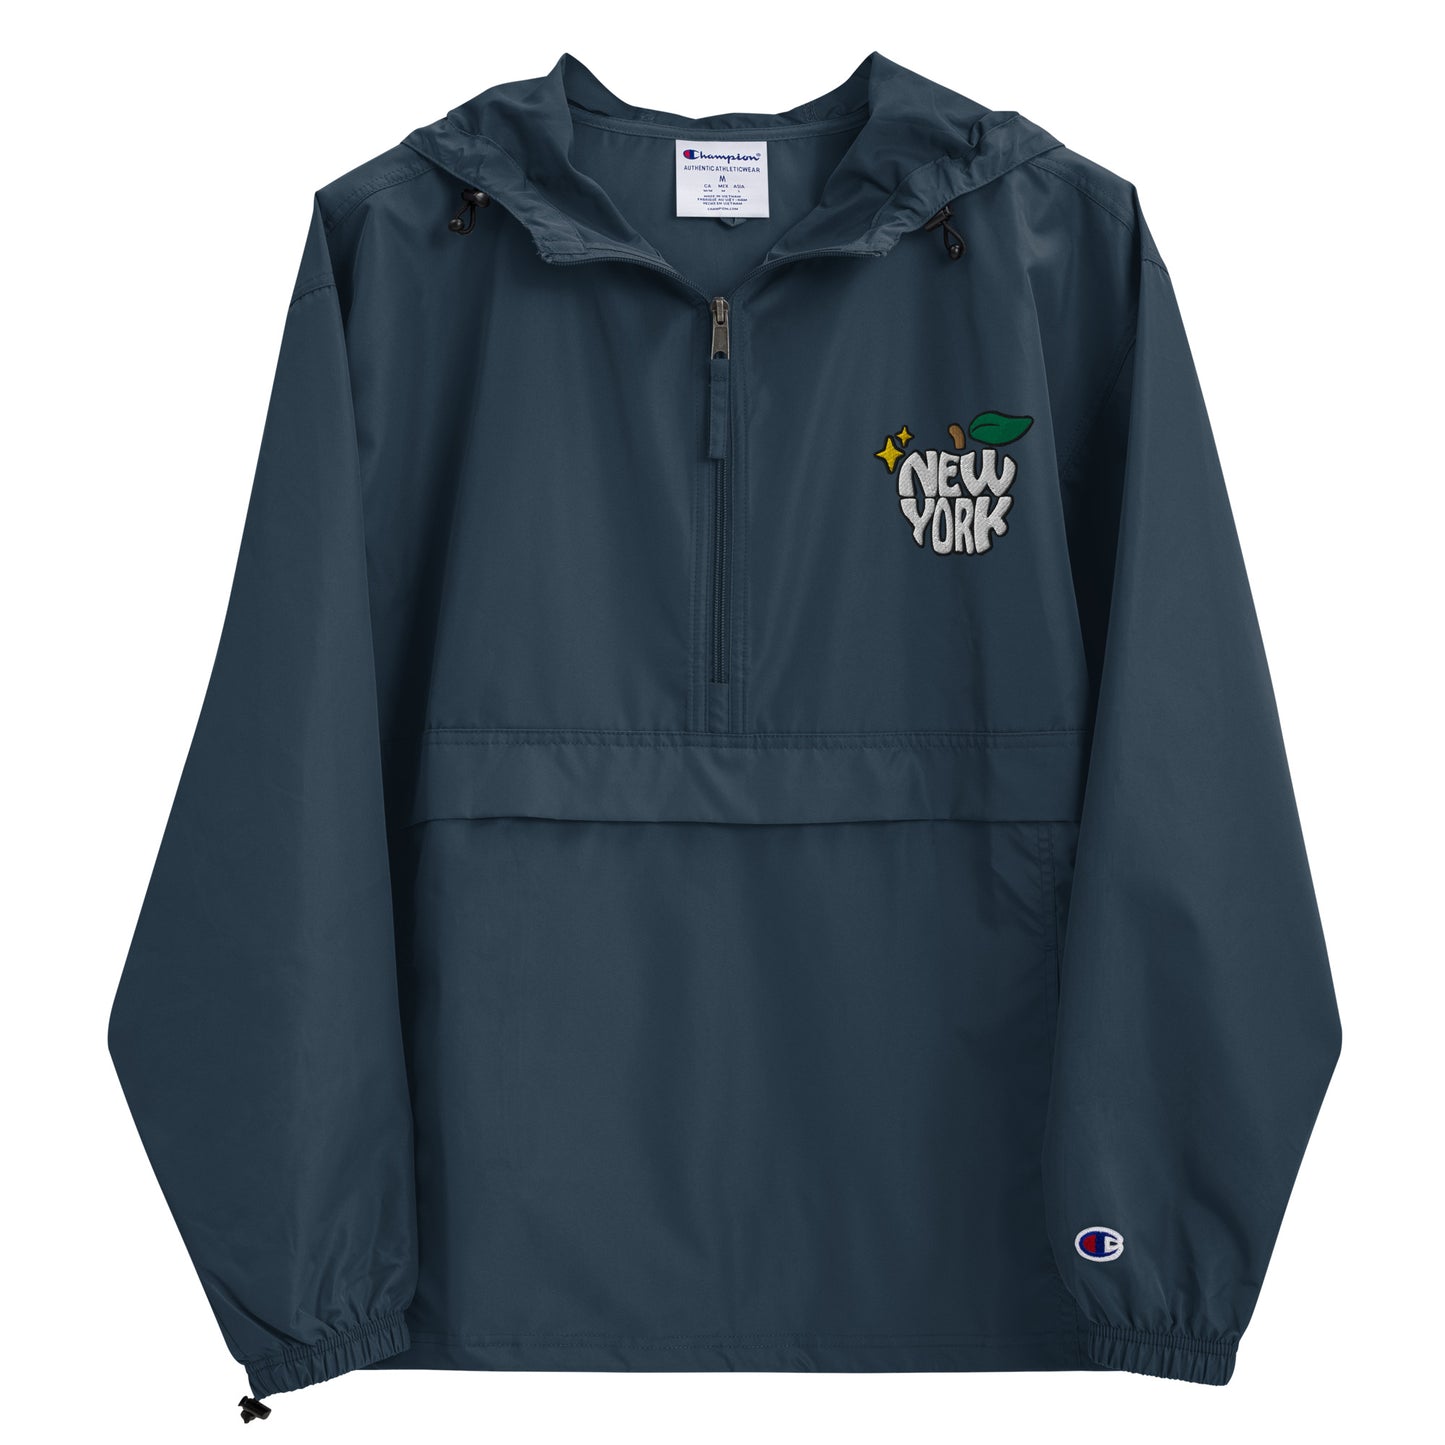 New York Apple Logo Embroidered Navy Blue Champion Packable Windbreaker Jacket Scattered Streetwear